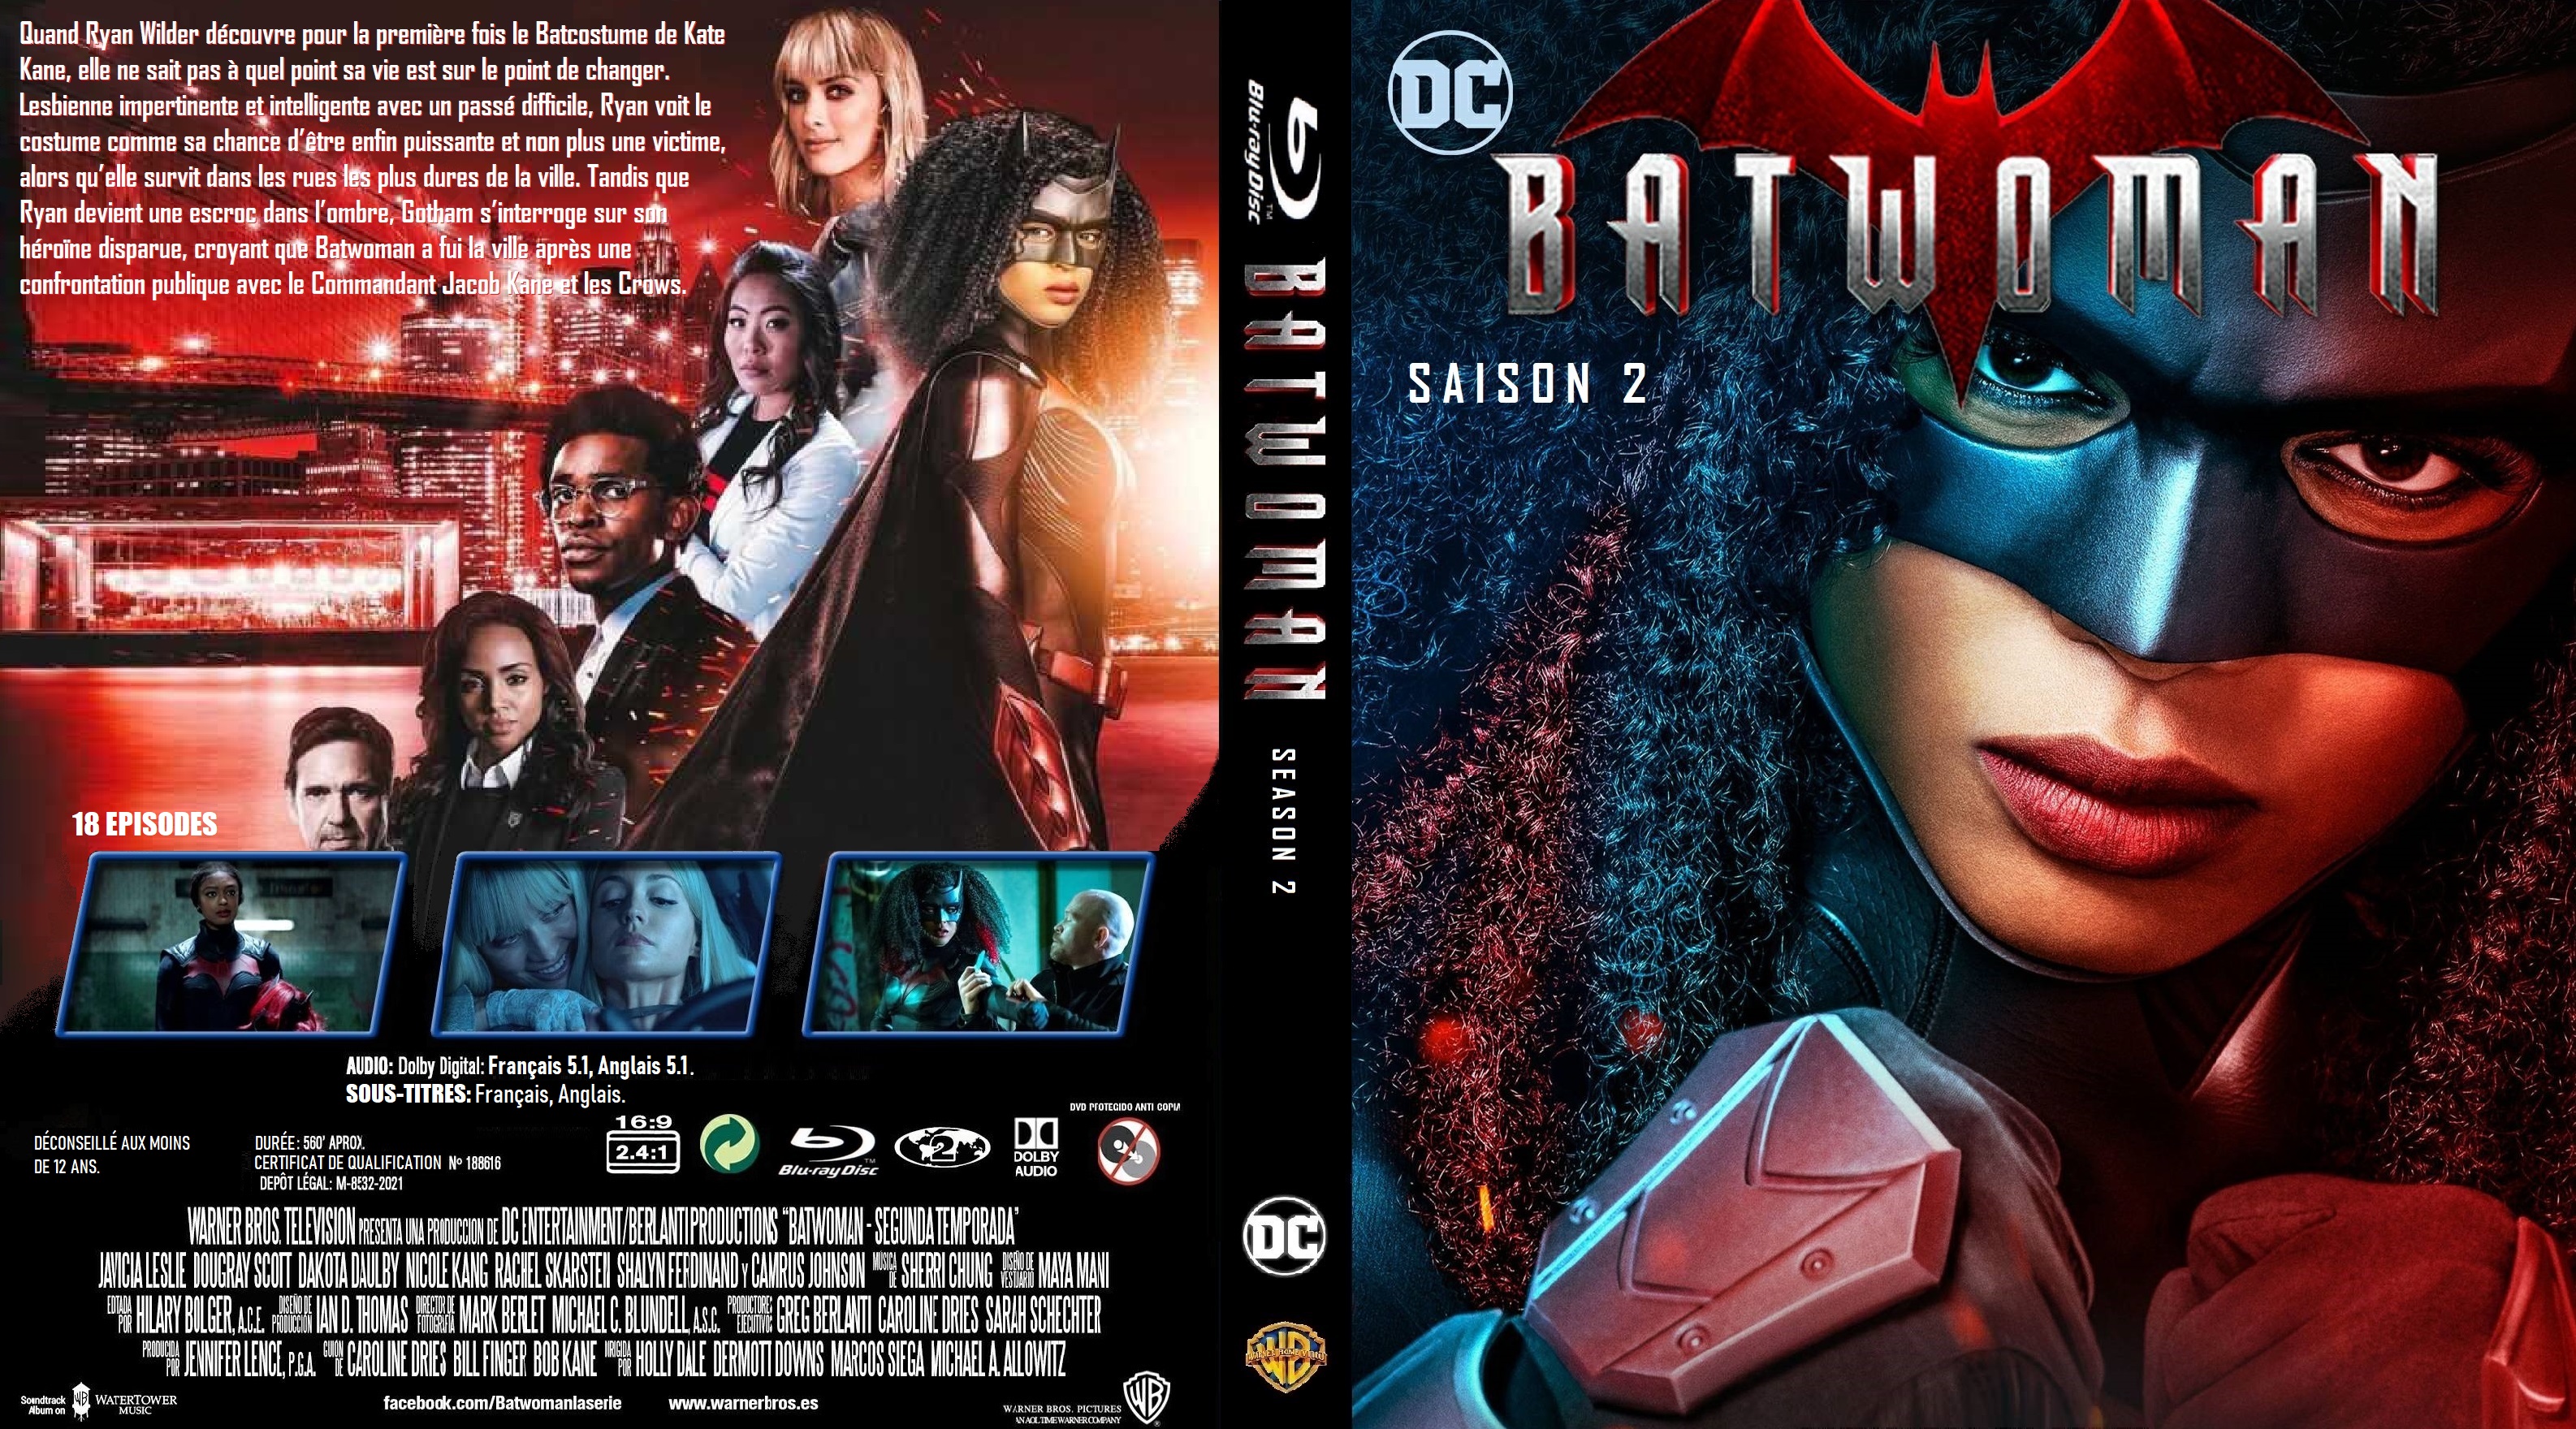 Jaquette DVD Batwoman Saison 2 Blu-ray custom